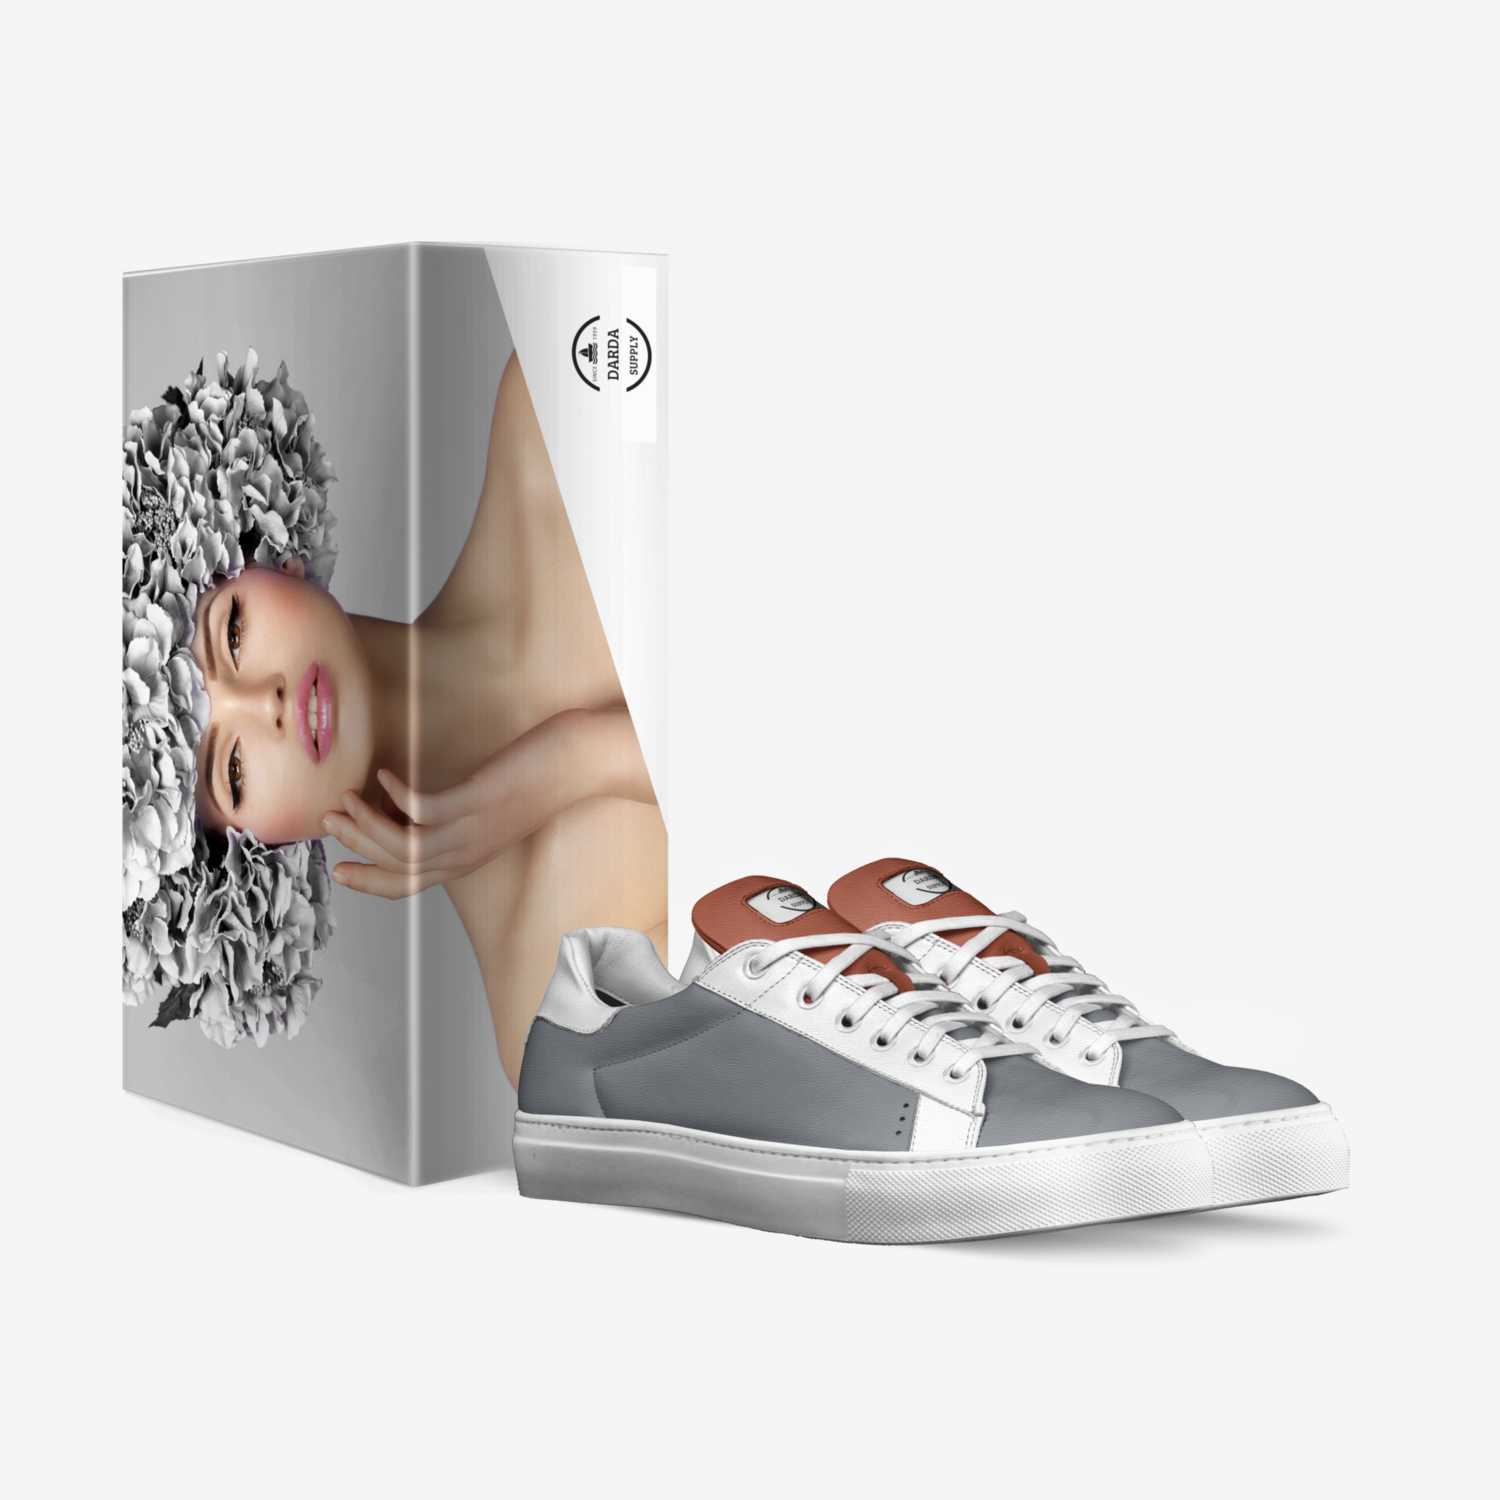 darda custom made in Italy shoes by Rodrigo Paes | Box view